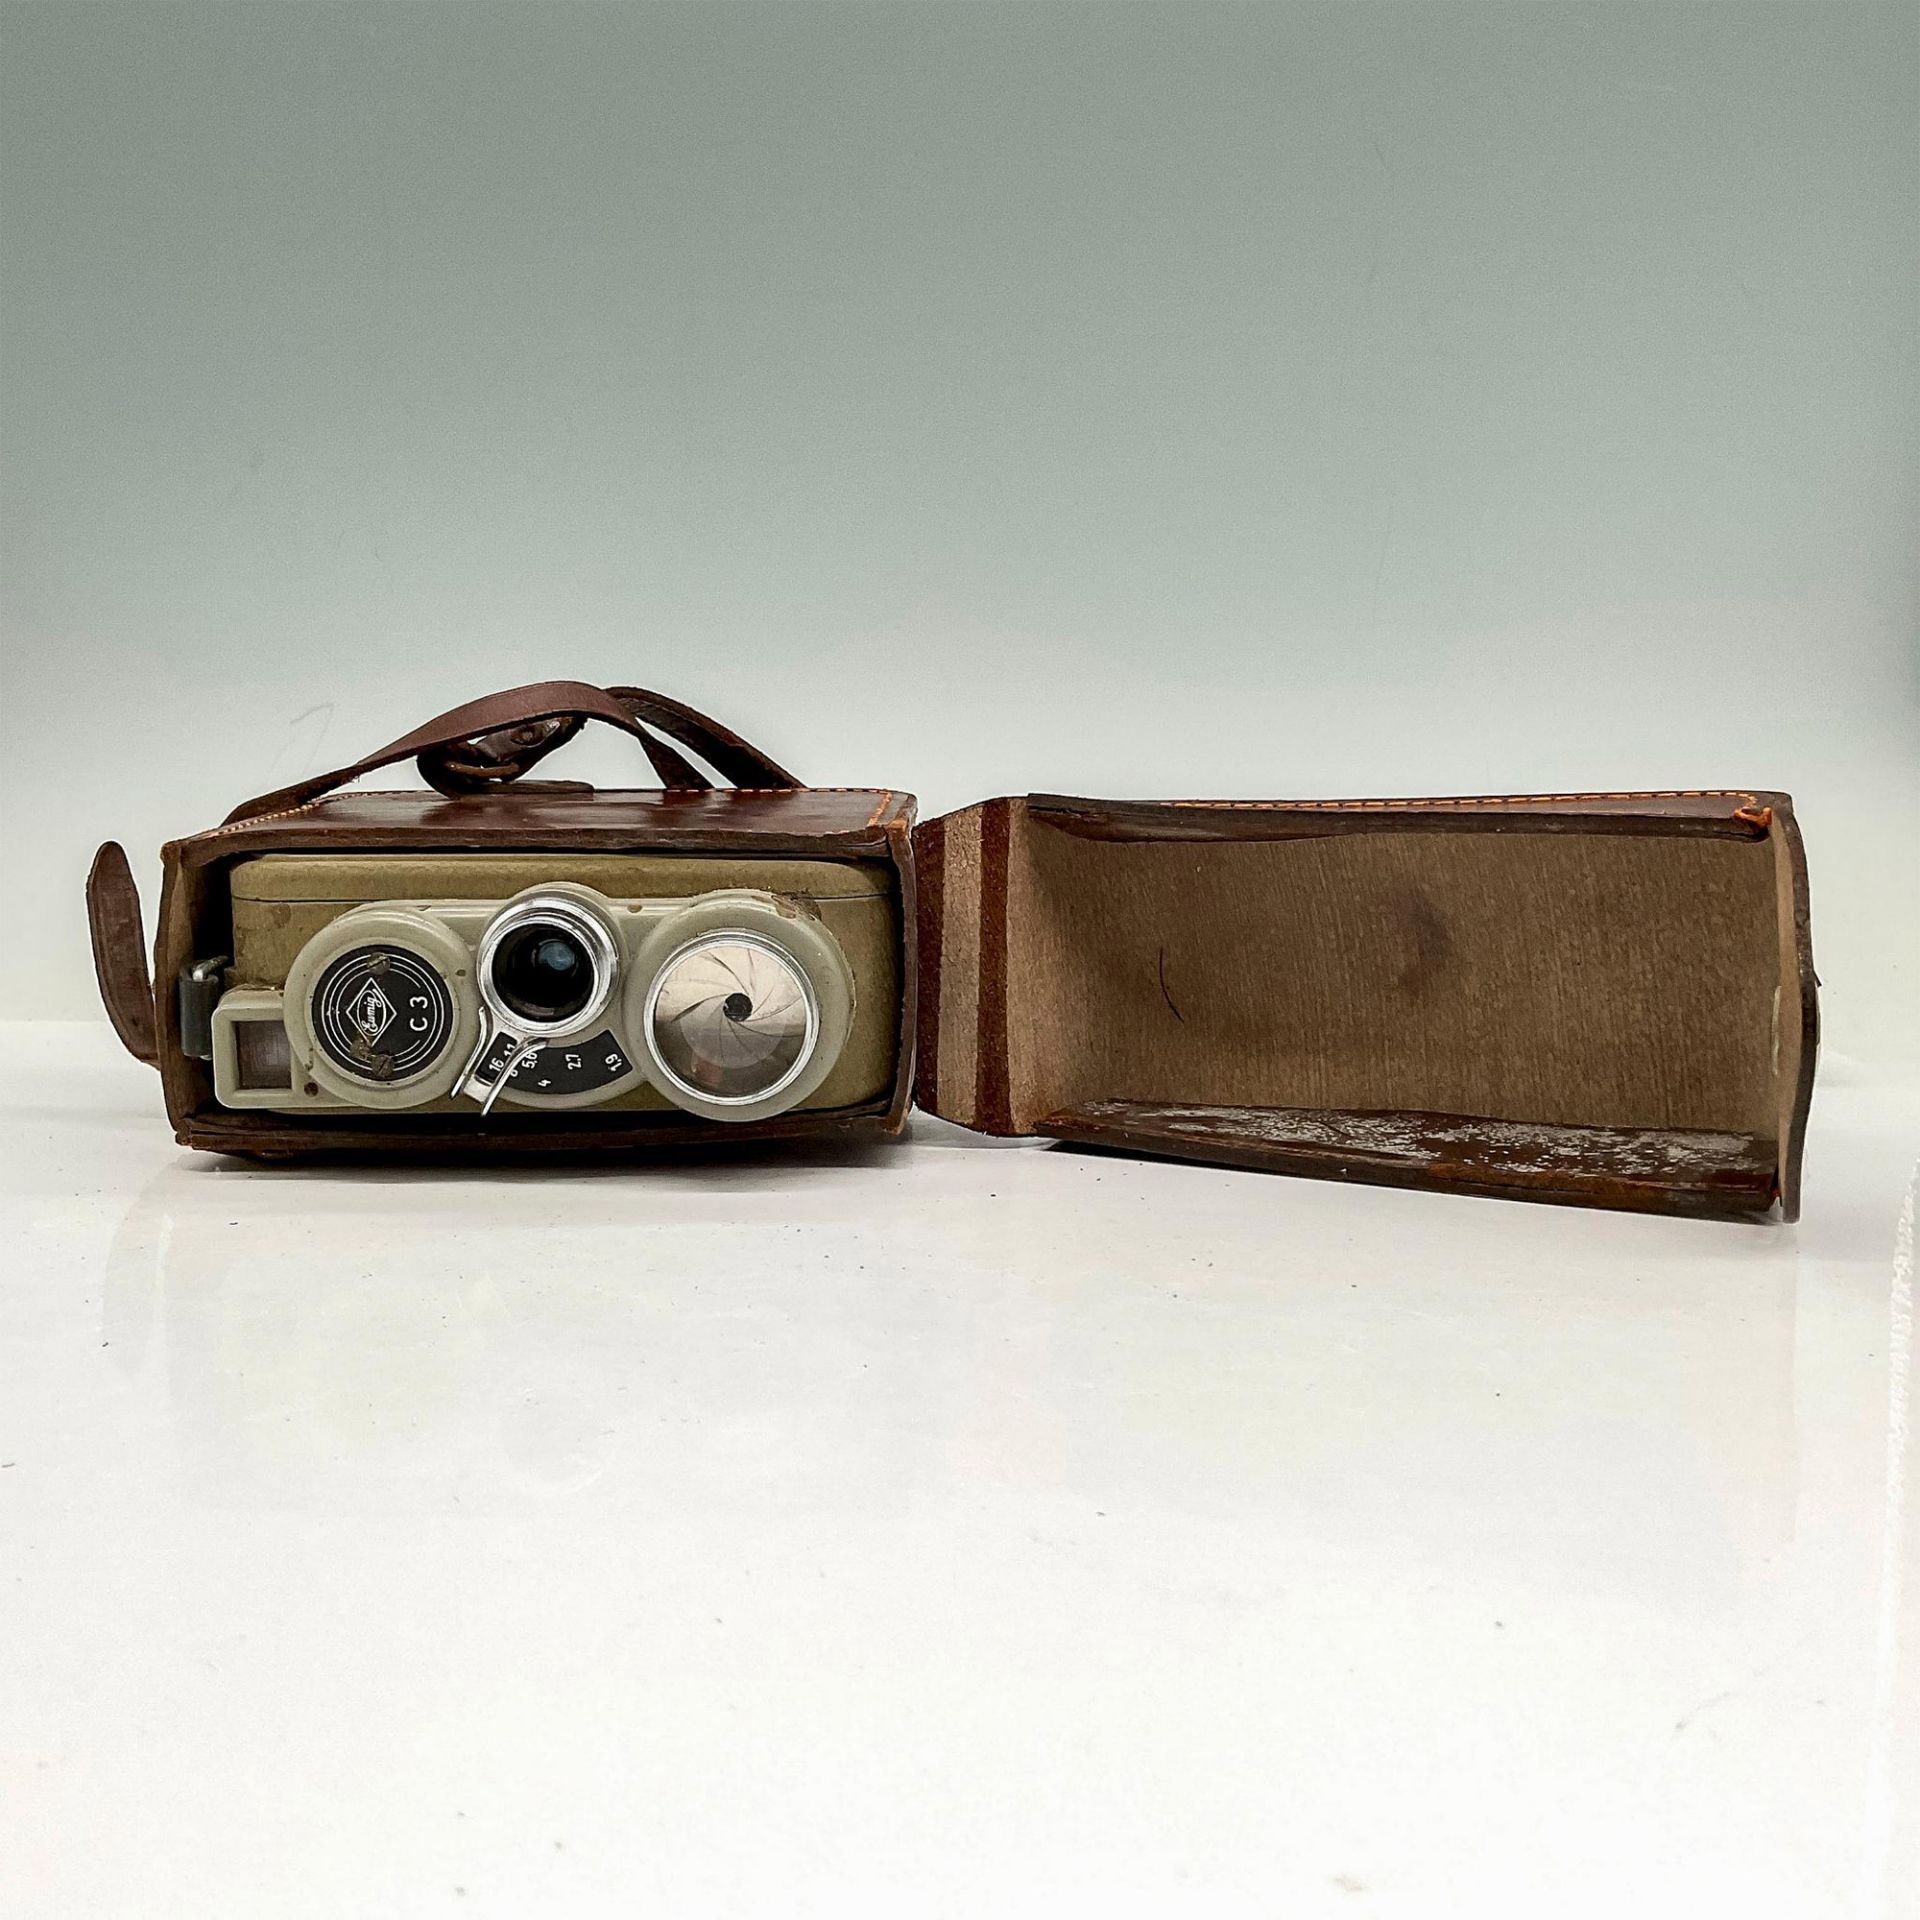 Eumig C3 8mm Cine Camera with Original Leather Case - Image 4 of 9